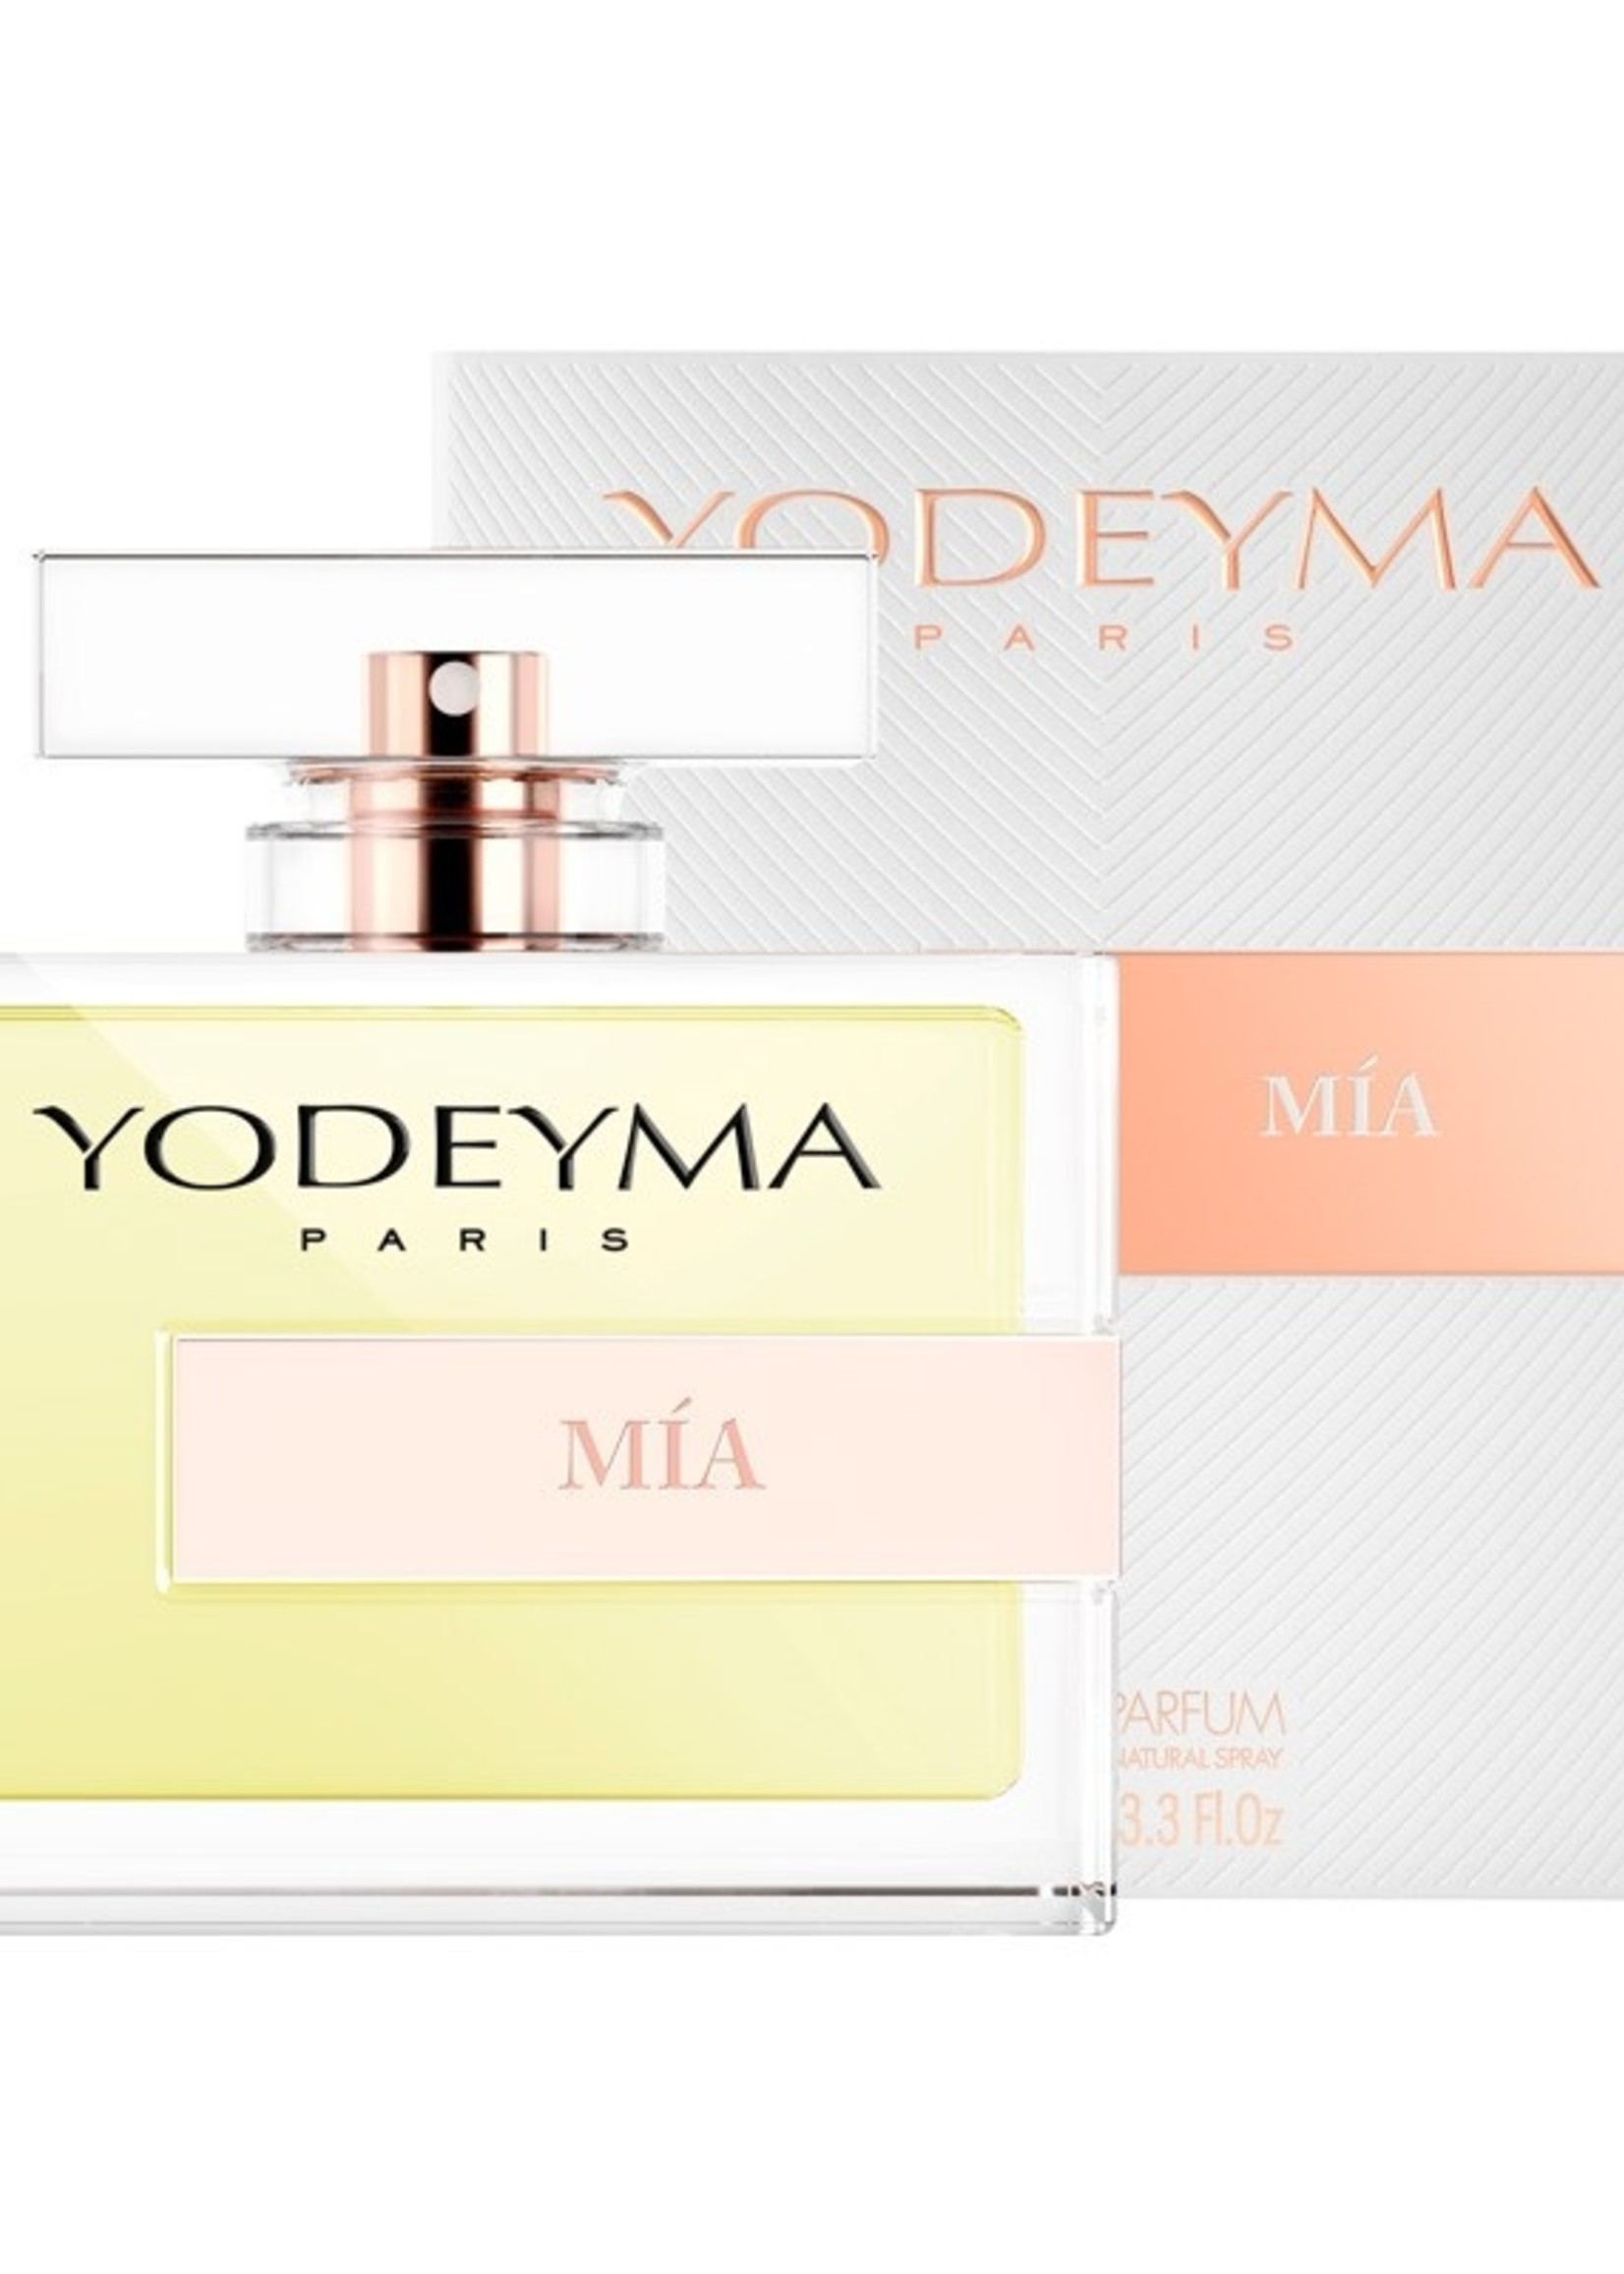 Yodeyma Parfums MÍA Eau de Parfum 100 ml.